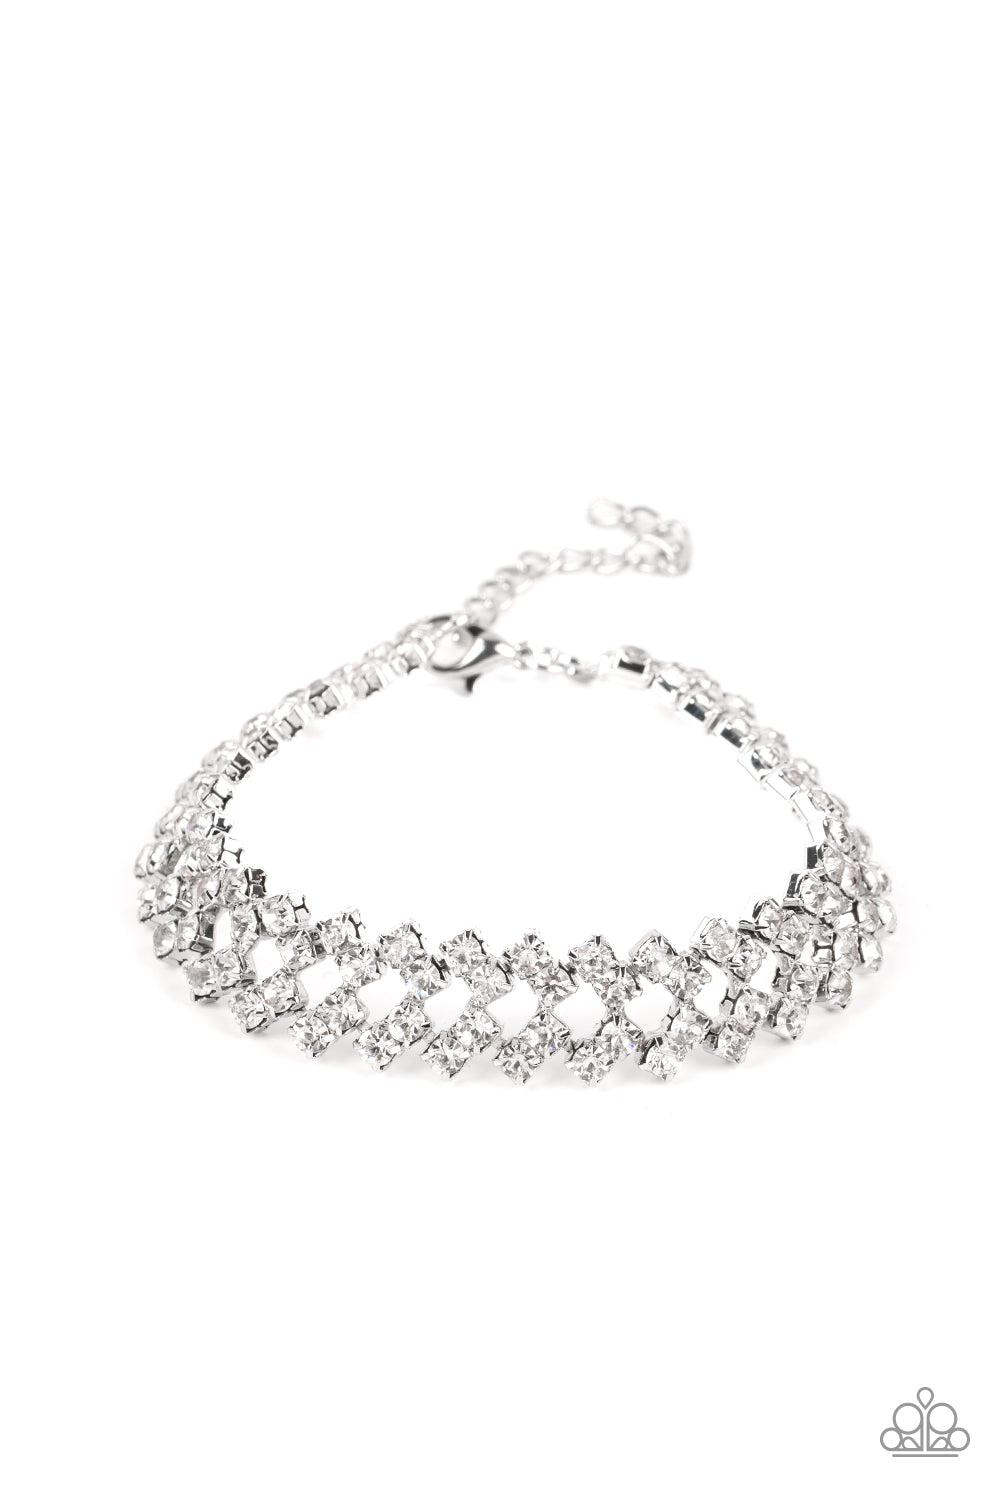 Seize The Sizzle White Rhinestone Bracelet - Paparazzi Accessories- lightbox - CarasShop.com - $5 Jewelry by Cara Jewels